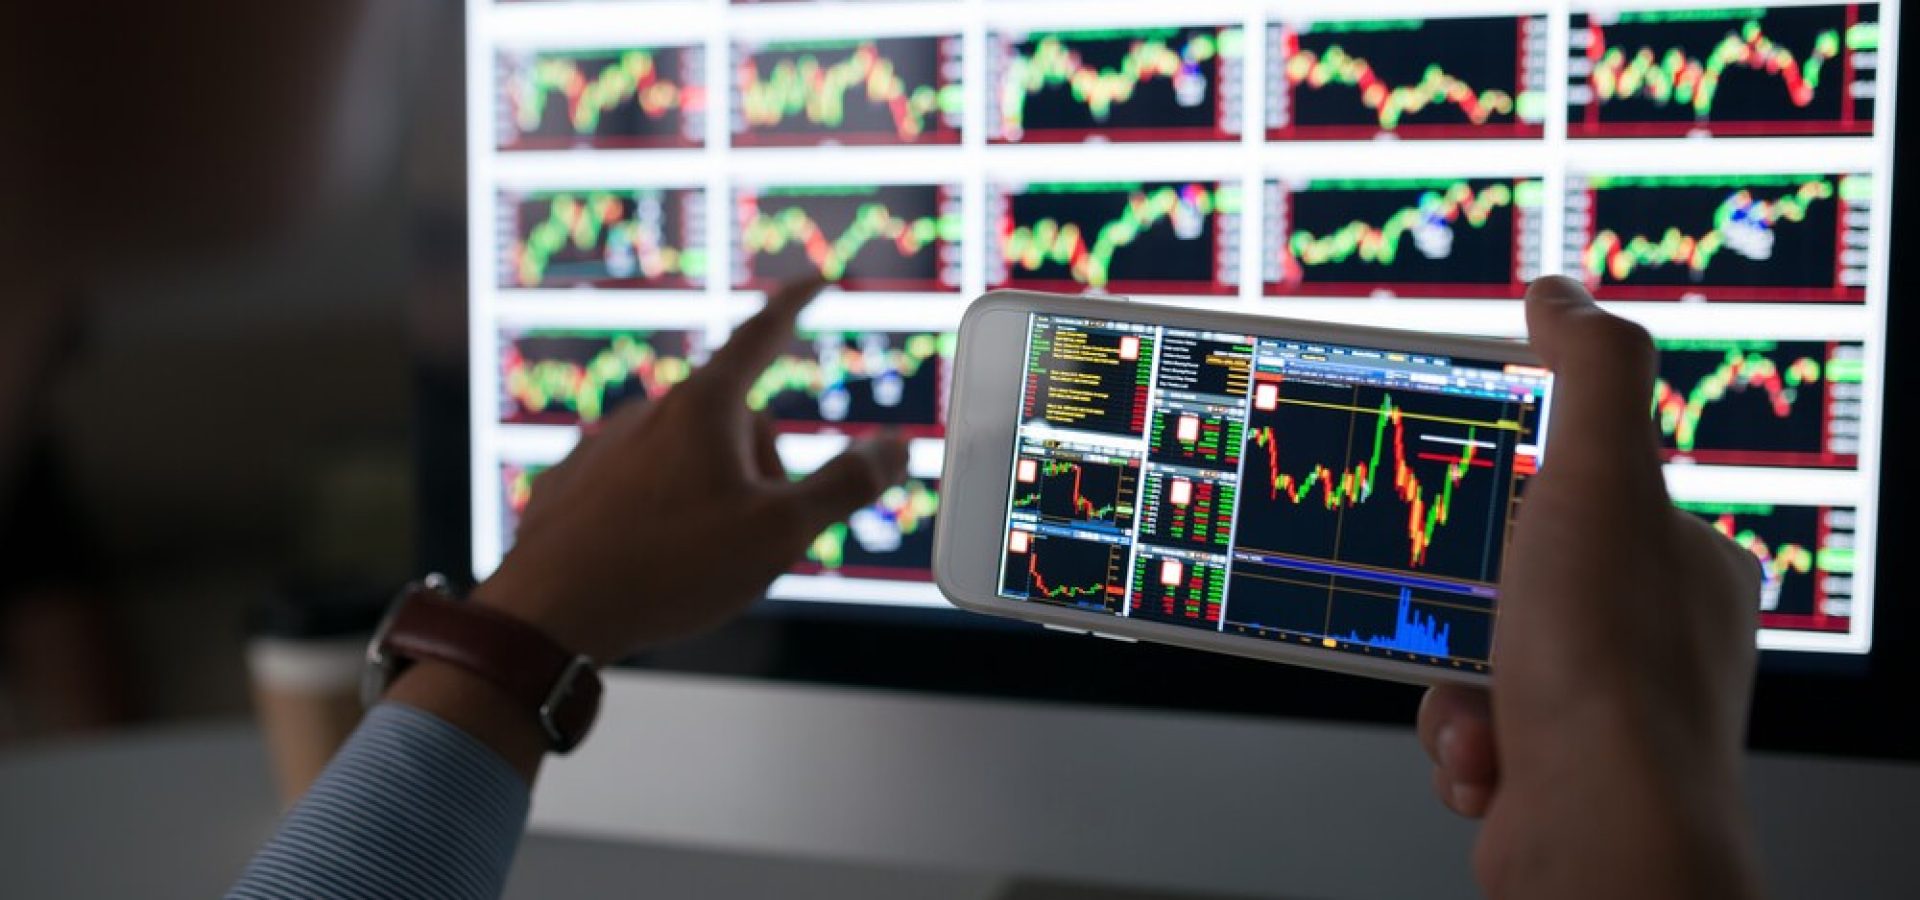 Trader: Hands of trader holding smartphone with stock market app